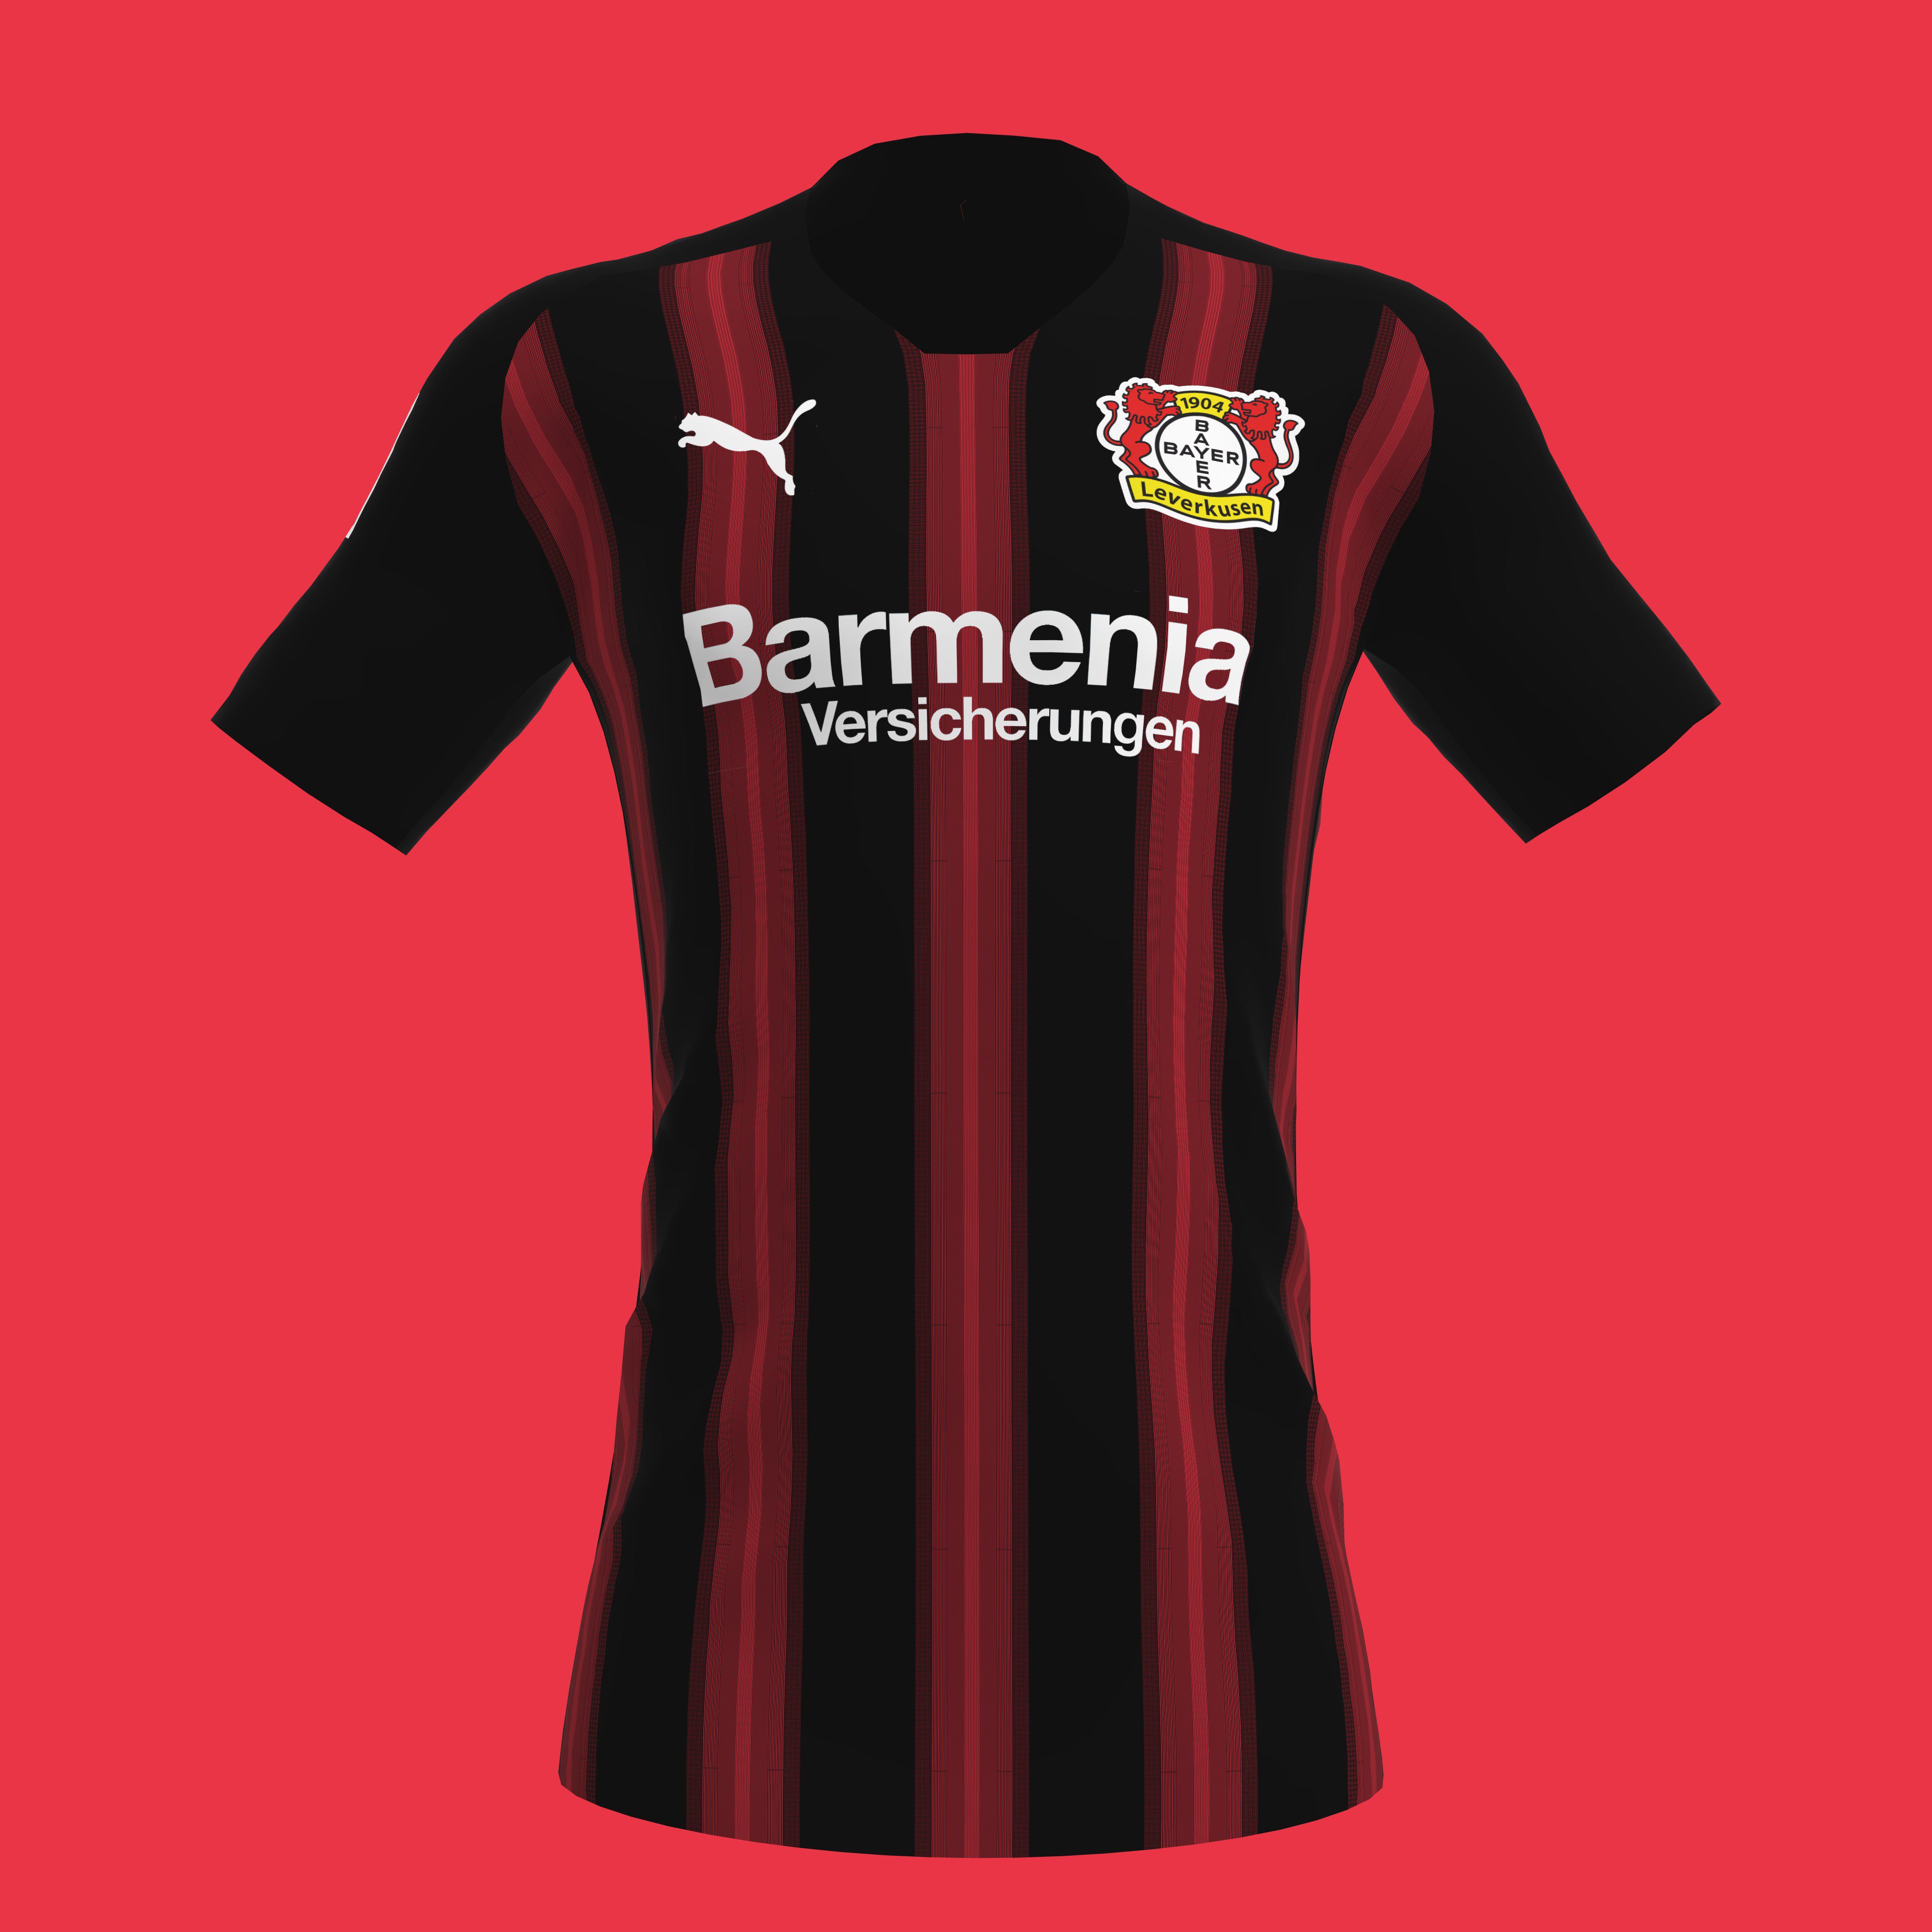 Afición Quetzal || AQ on Twitter: x @PUMA home kit @TeamAlario @lucasalario13 #LucasAlario #Leverkusen #Bayer #Werkself #Germany #Bundesliga #FantasyKit #FootballDesign #Fussball #Streetwear #Sportswear # PUMA #EvoKnit https://t.co ...